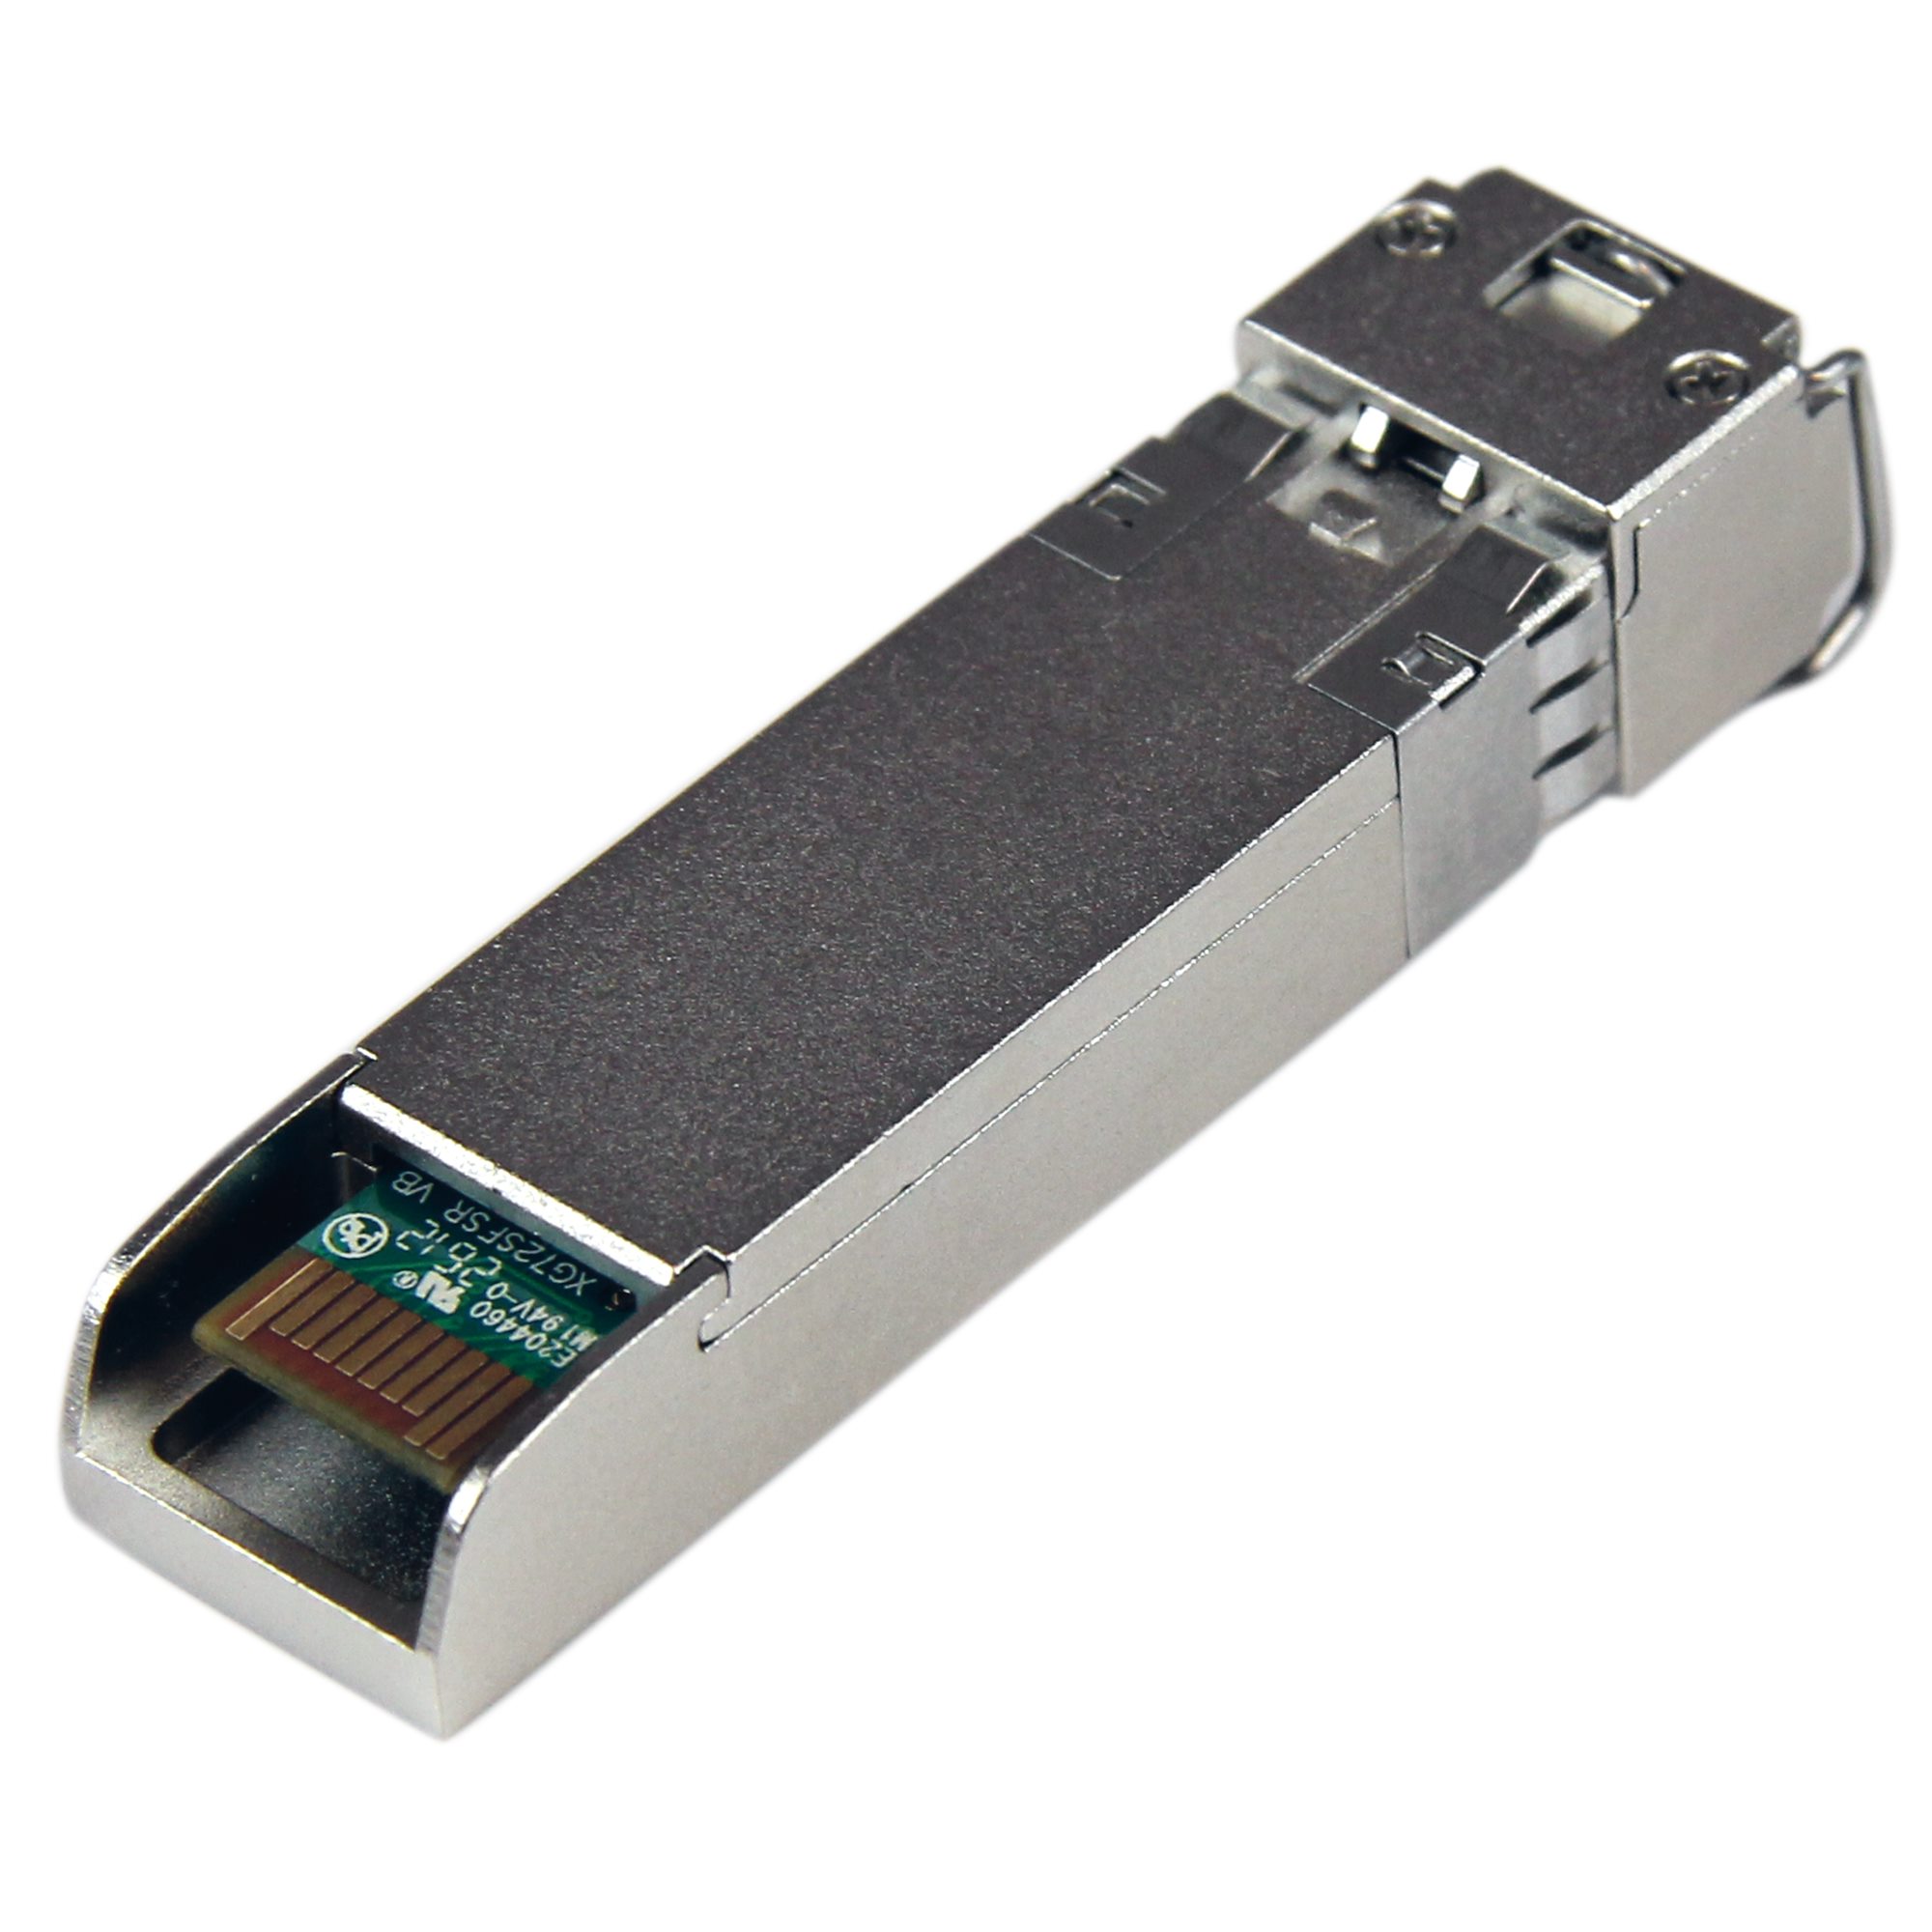 2-Pack 1000Base-LX Gigabit Single-Mode SFP Transceiver Module Compatible Cisco